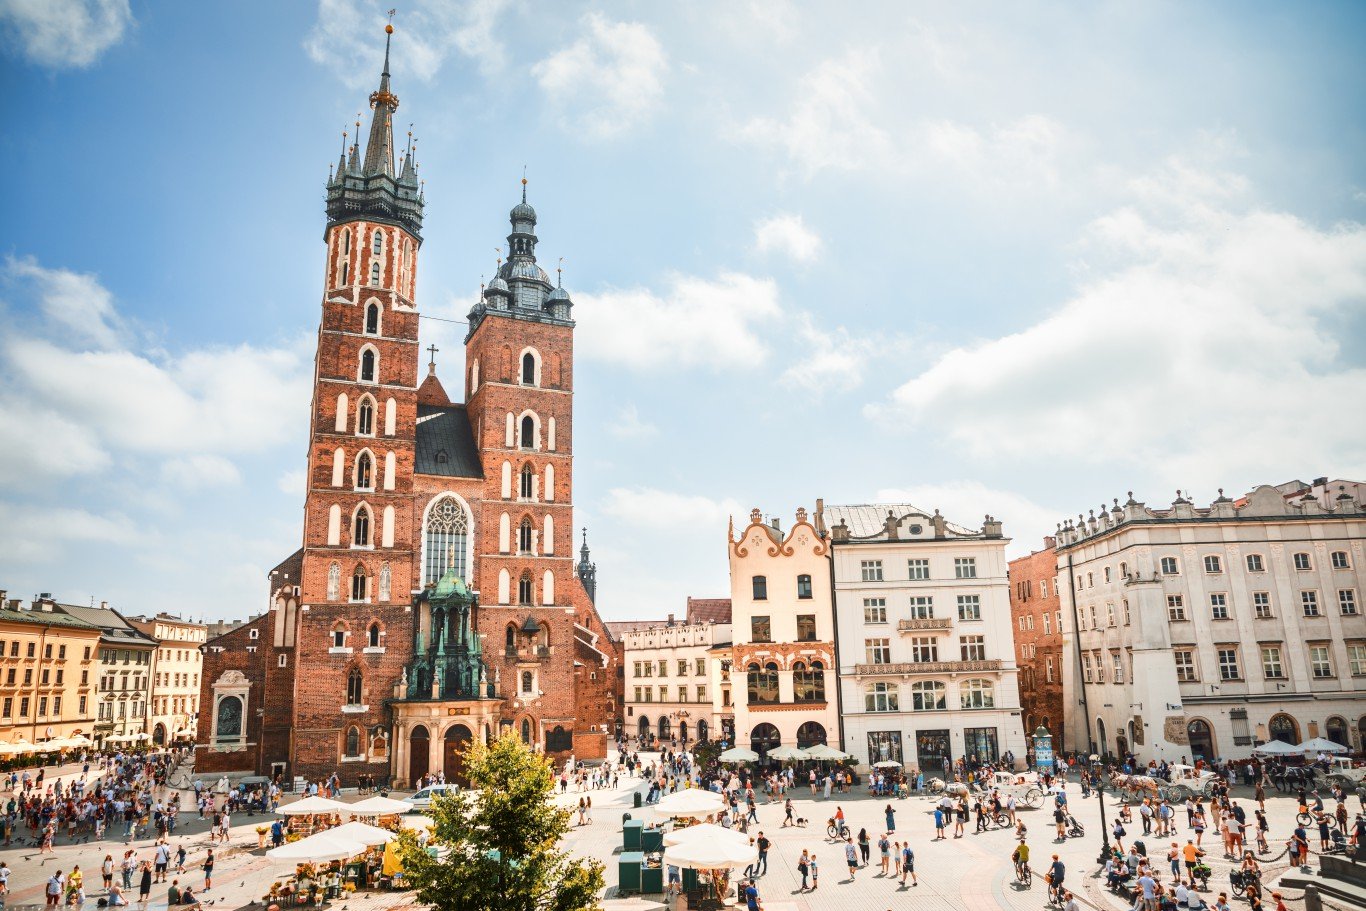 | Old Town in Krakow, Poland